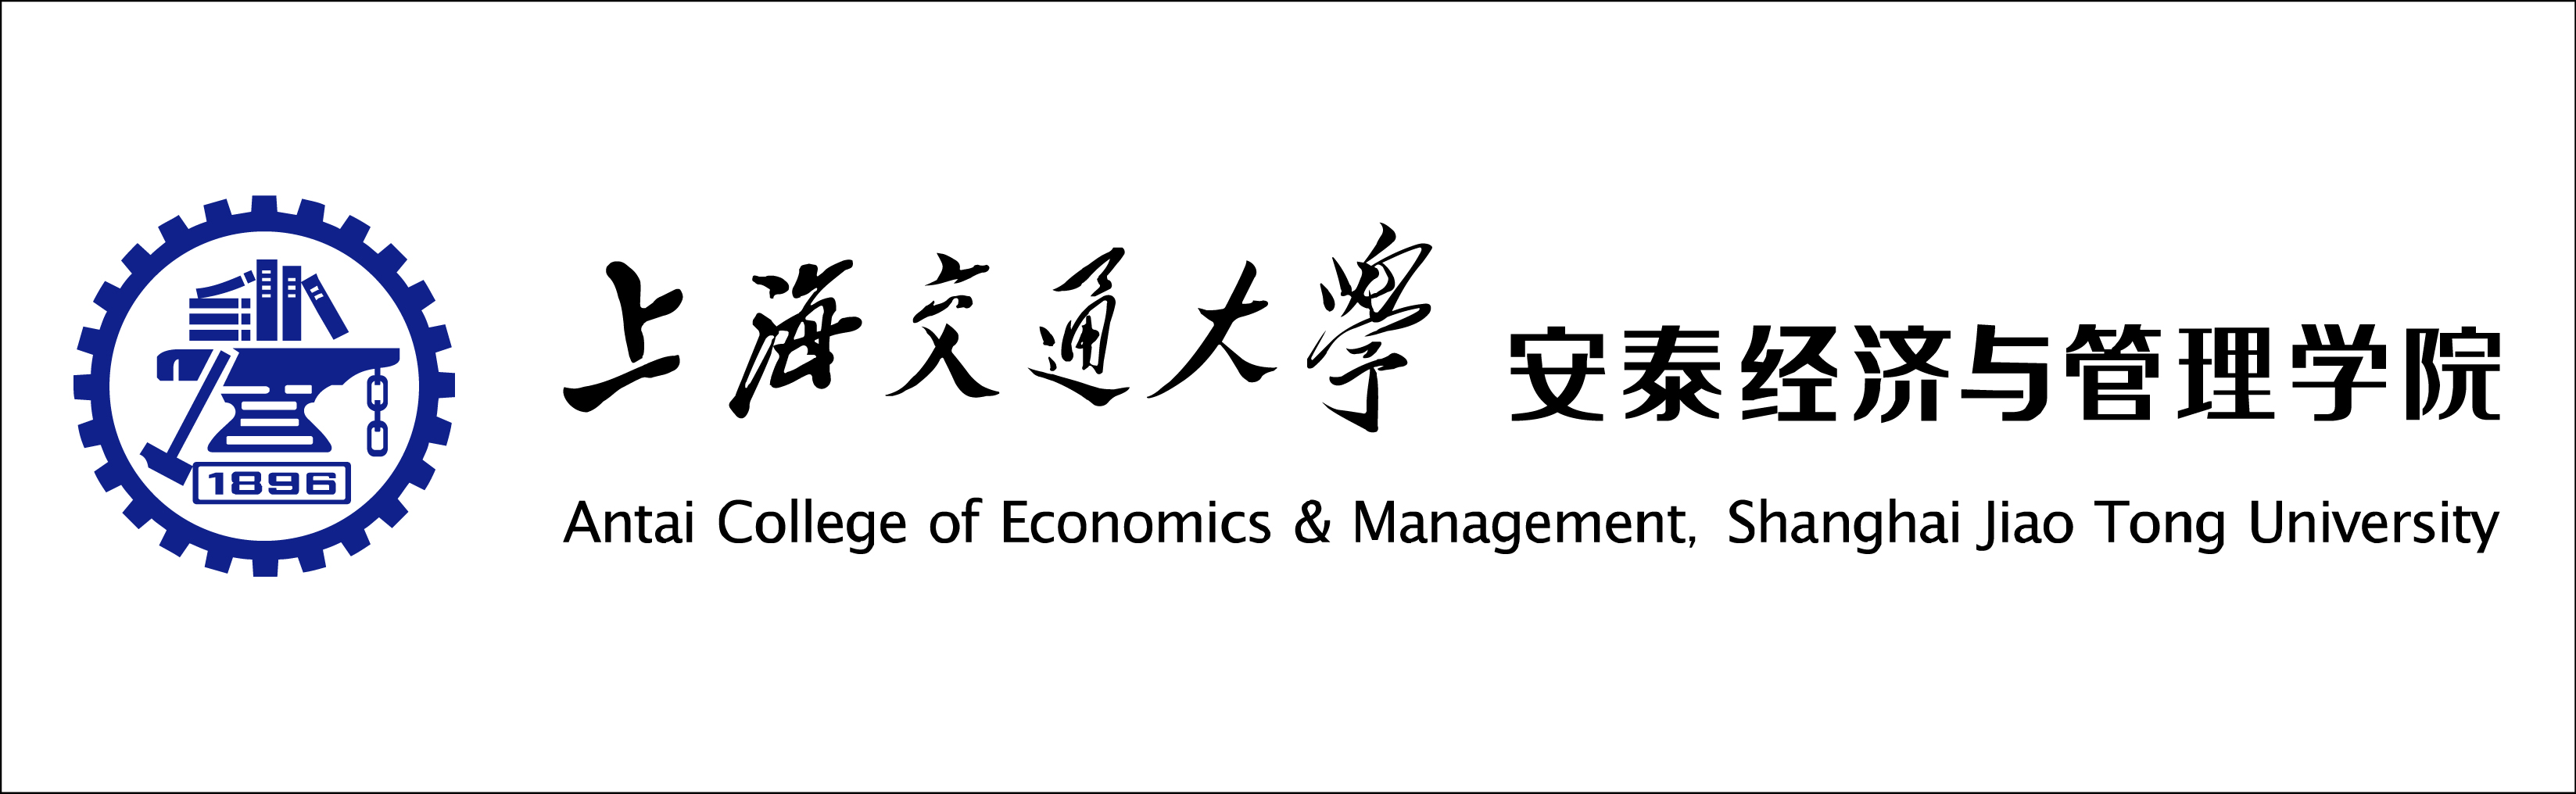 Logo Shanghai Jiao Tong University - Antai College of Economics and Management